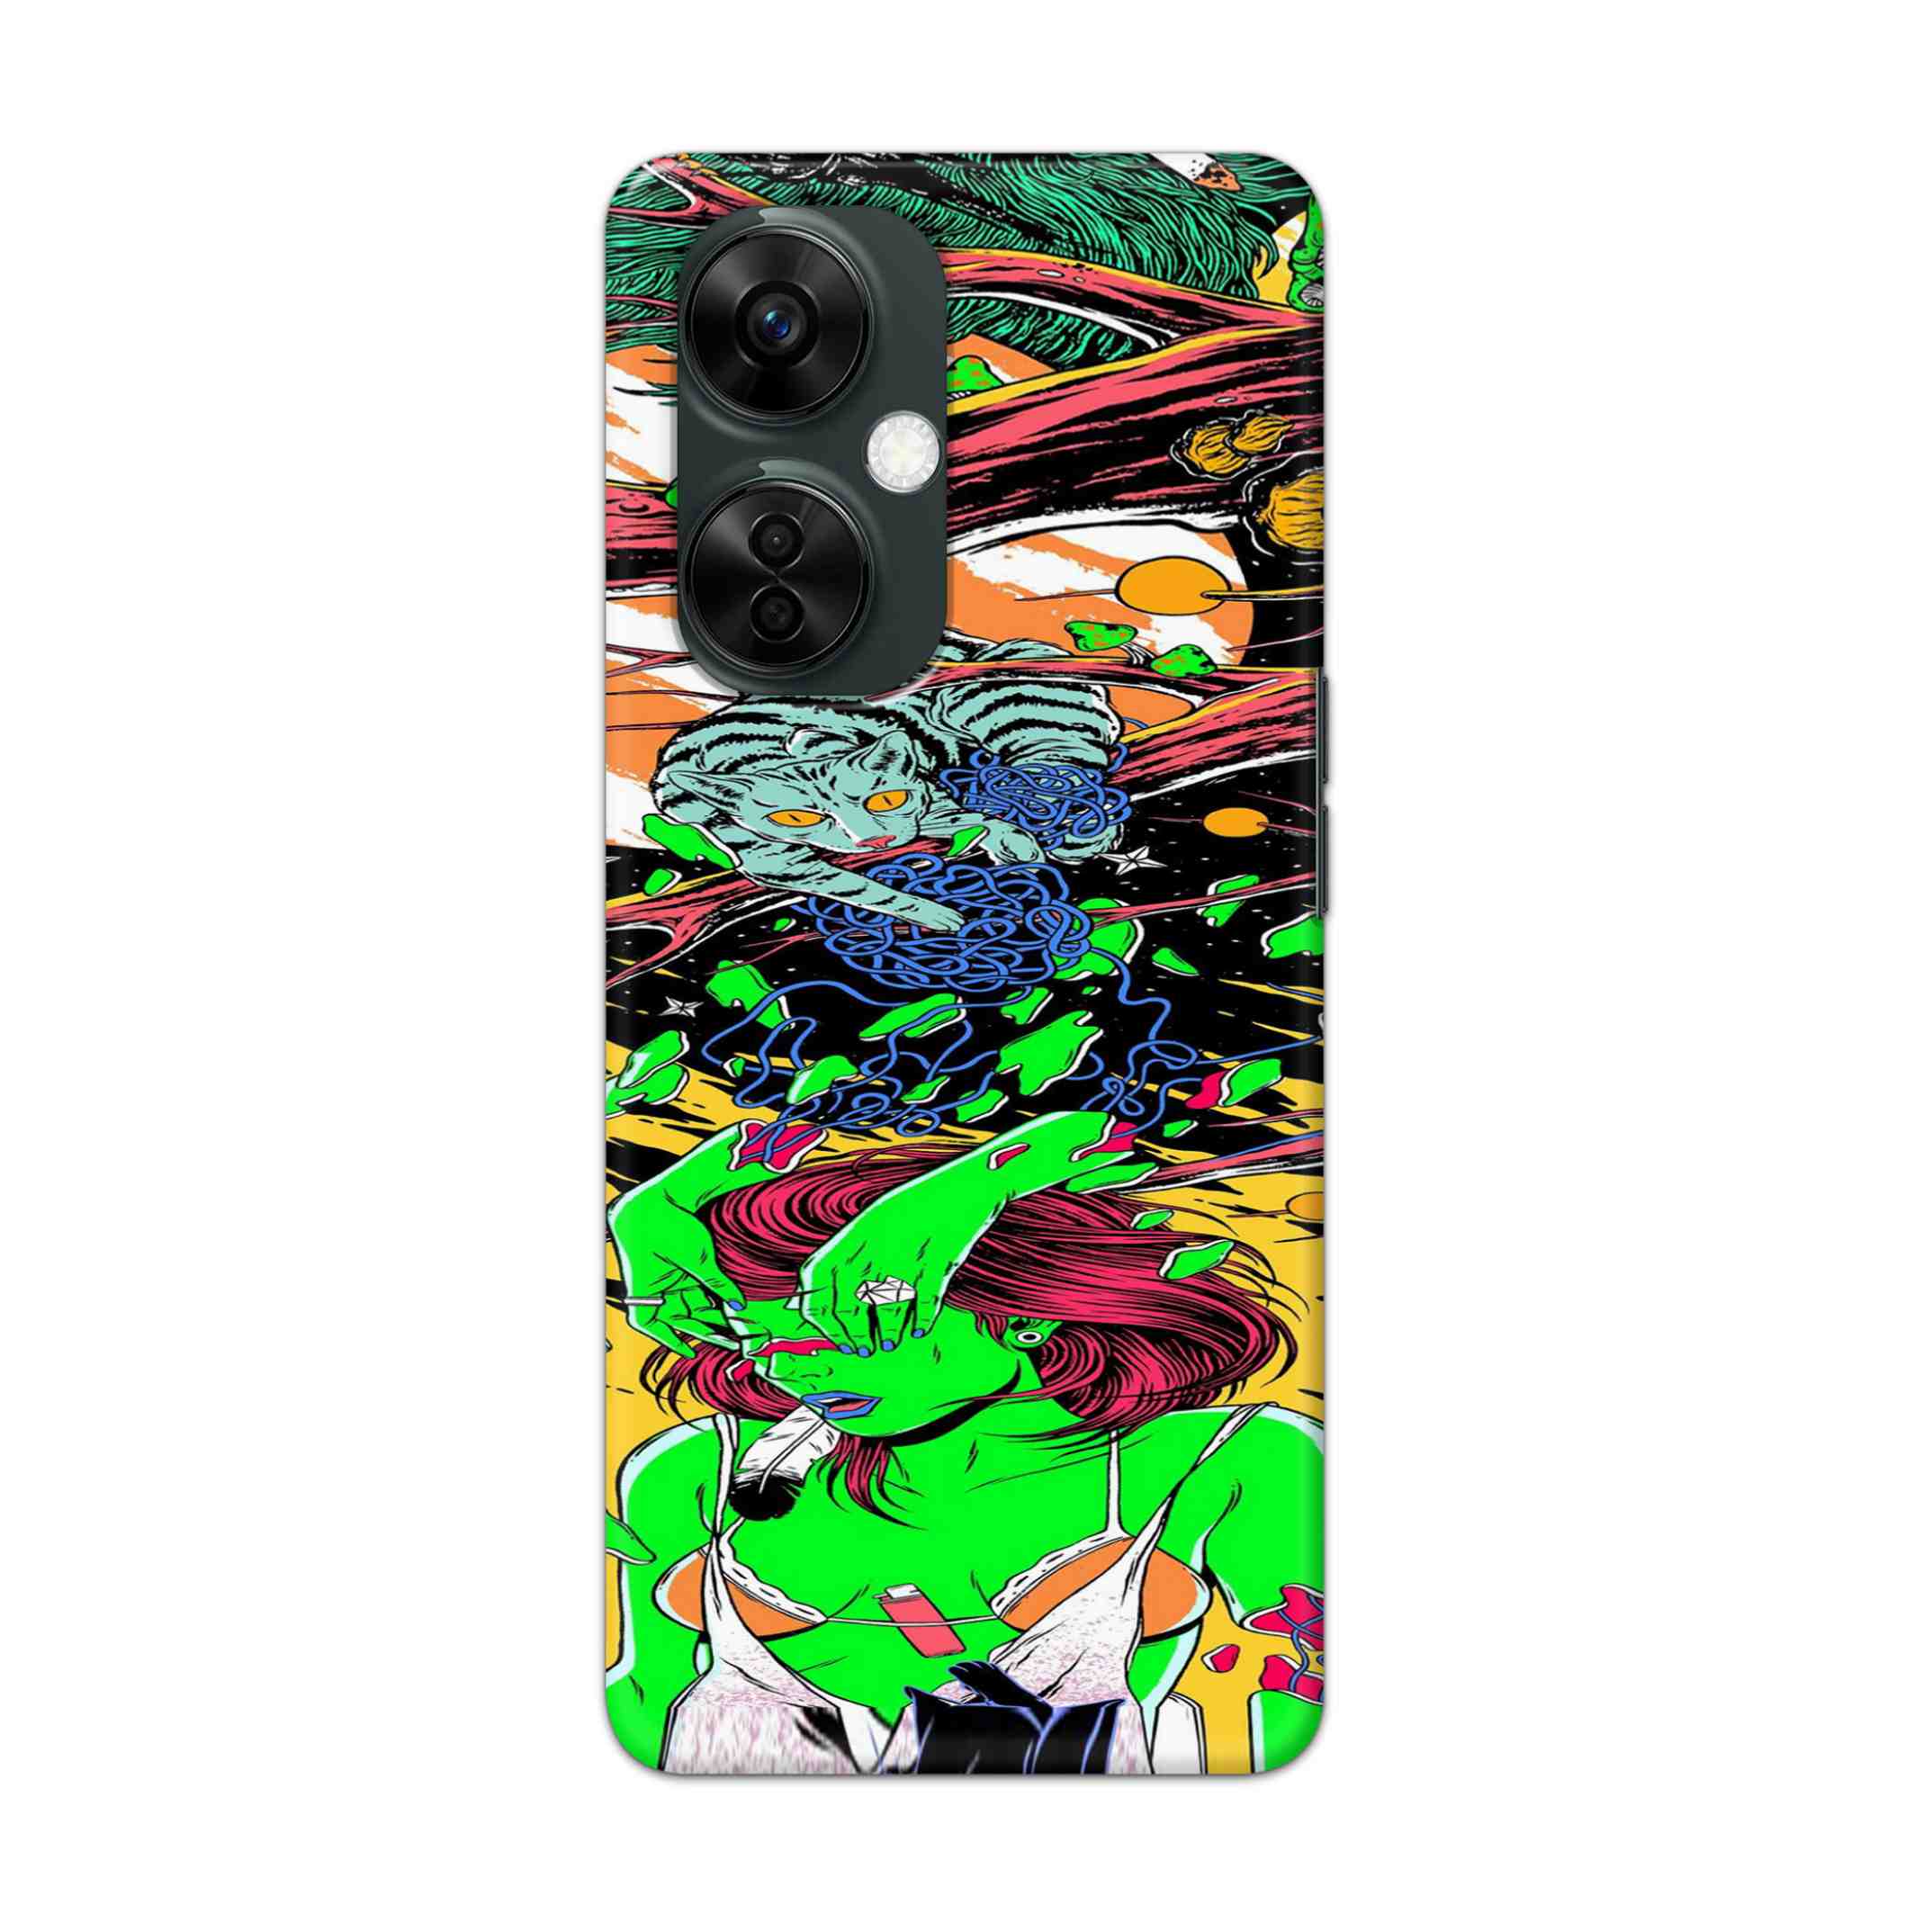 Buy Green Girl Art Hard Back Mobile Phone Case Cover For Oneplus Nord CE 3 Lite Online